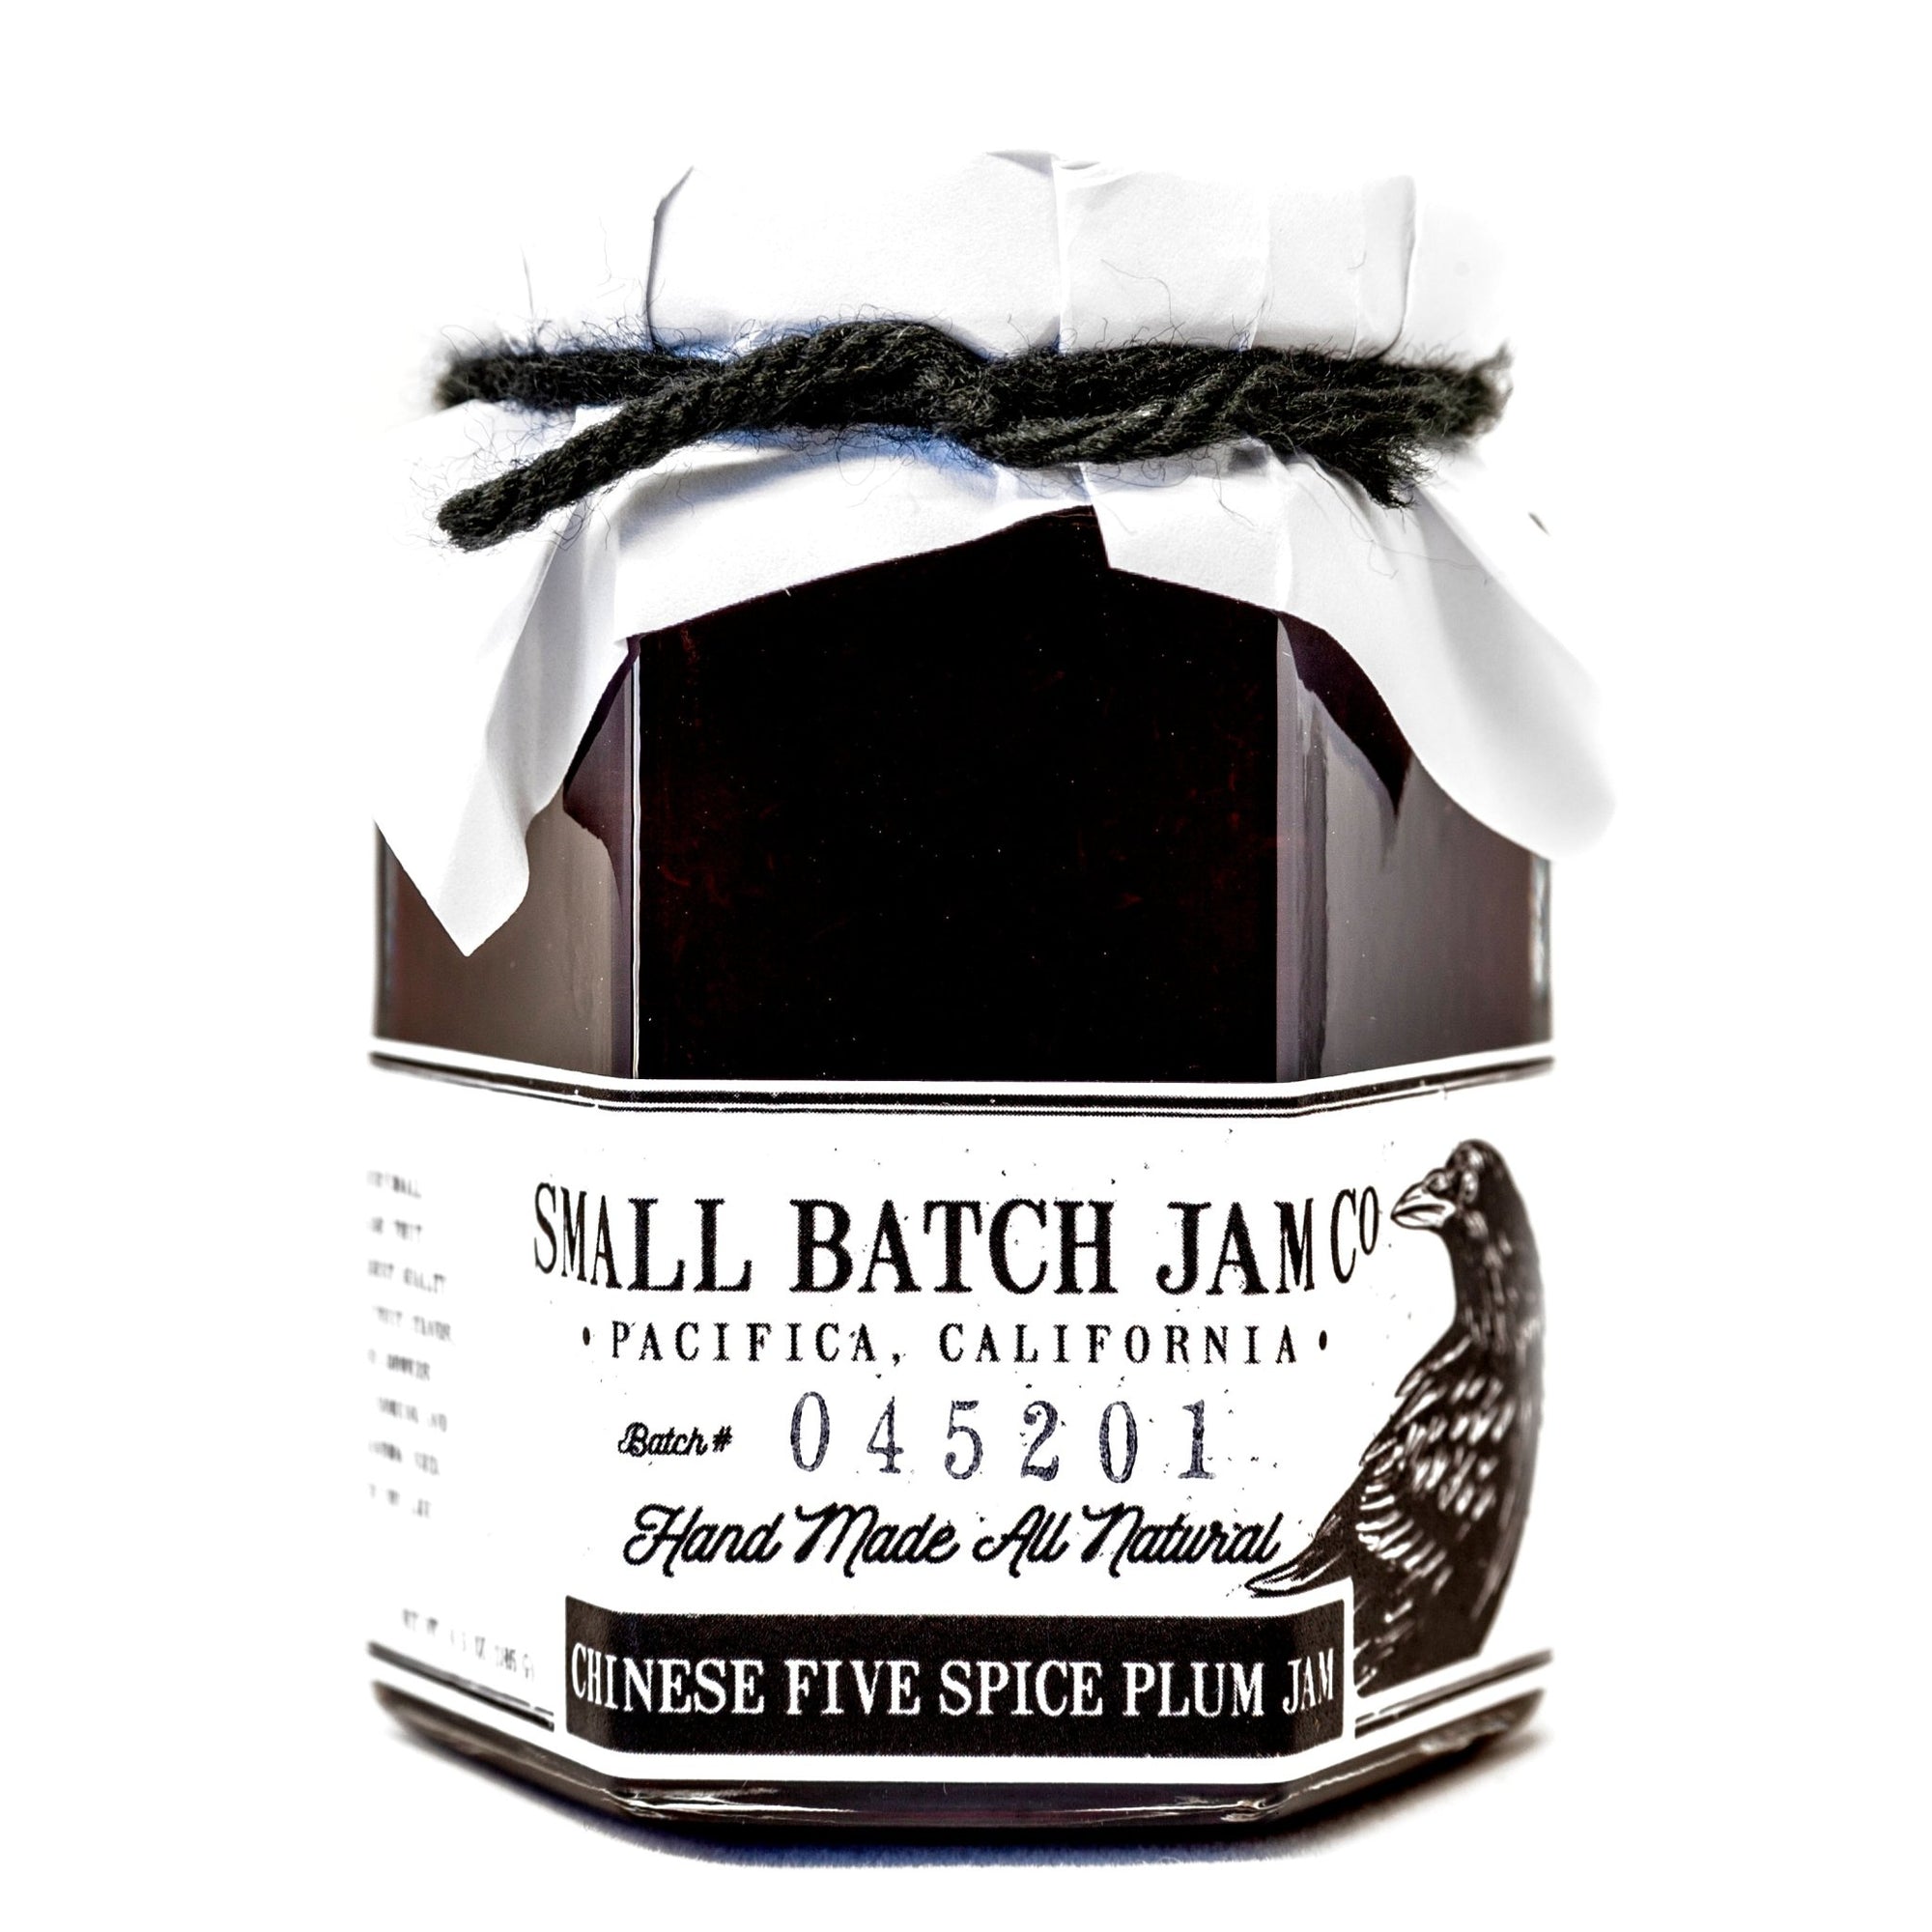 Chinese Five Spice Plum Jam - Small Batch Jam Co